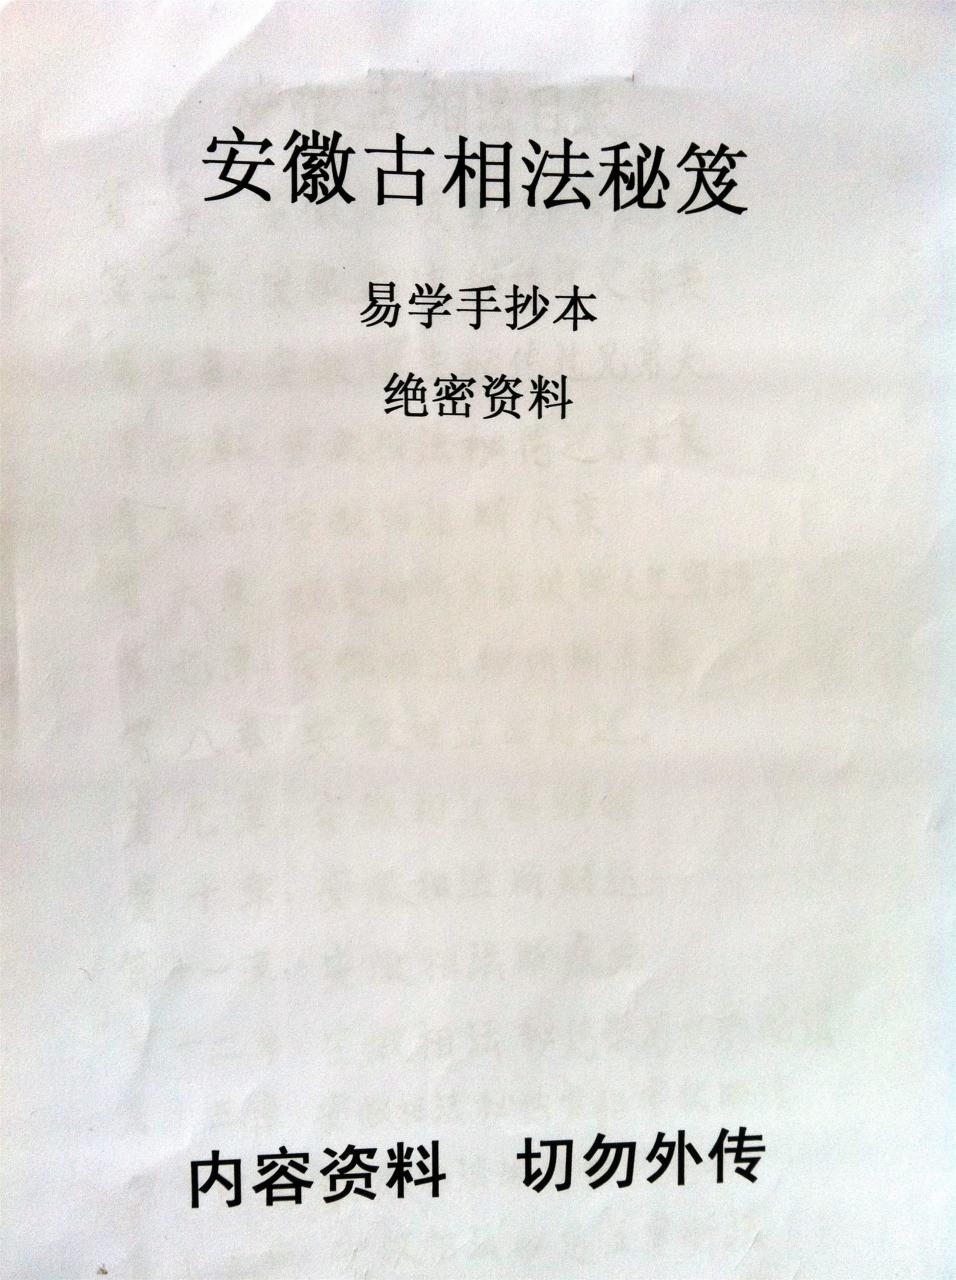 Anhui ancient phase method secrets handwritten book